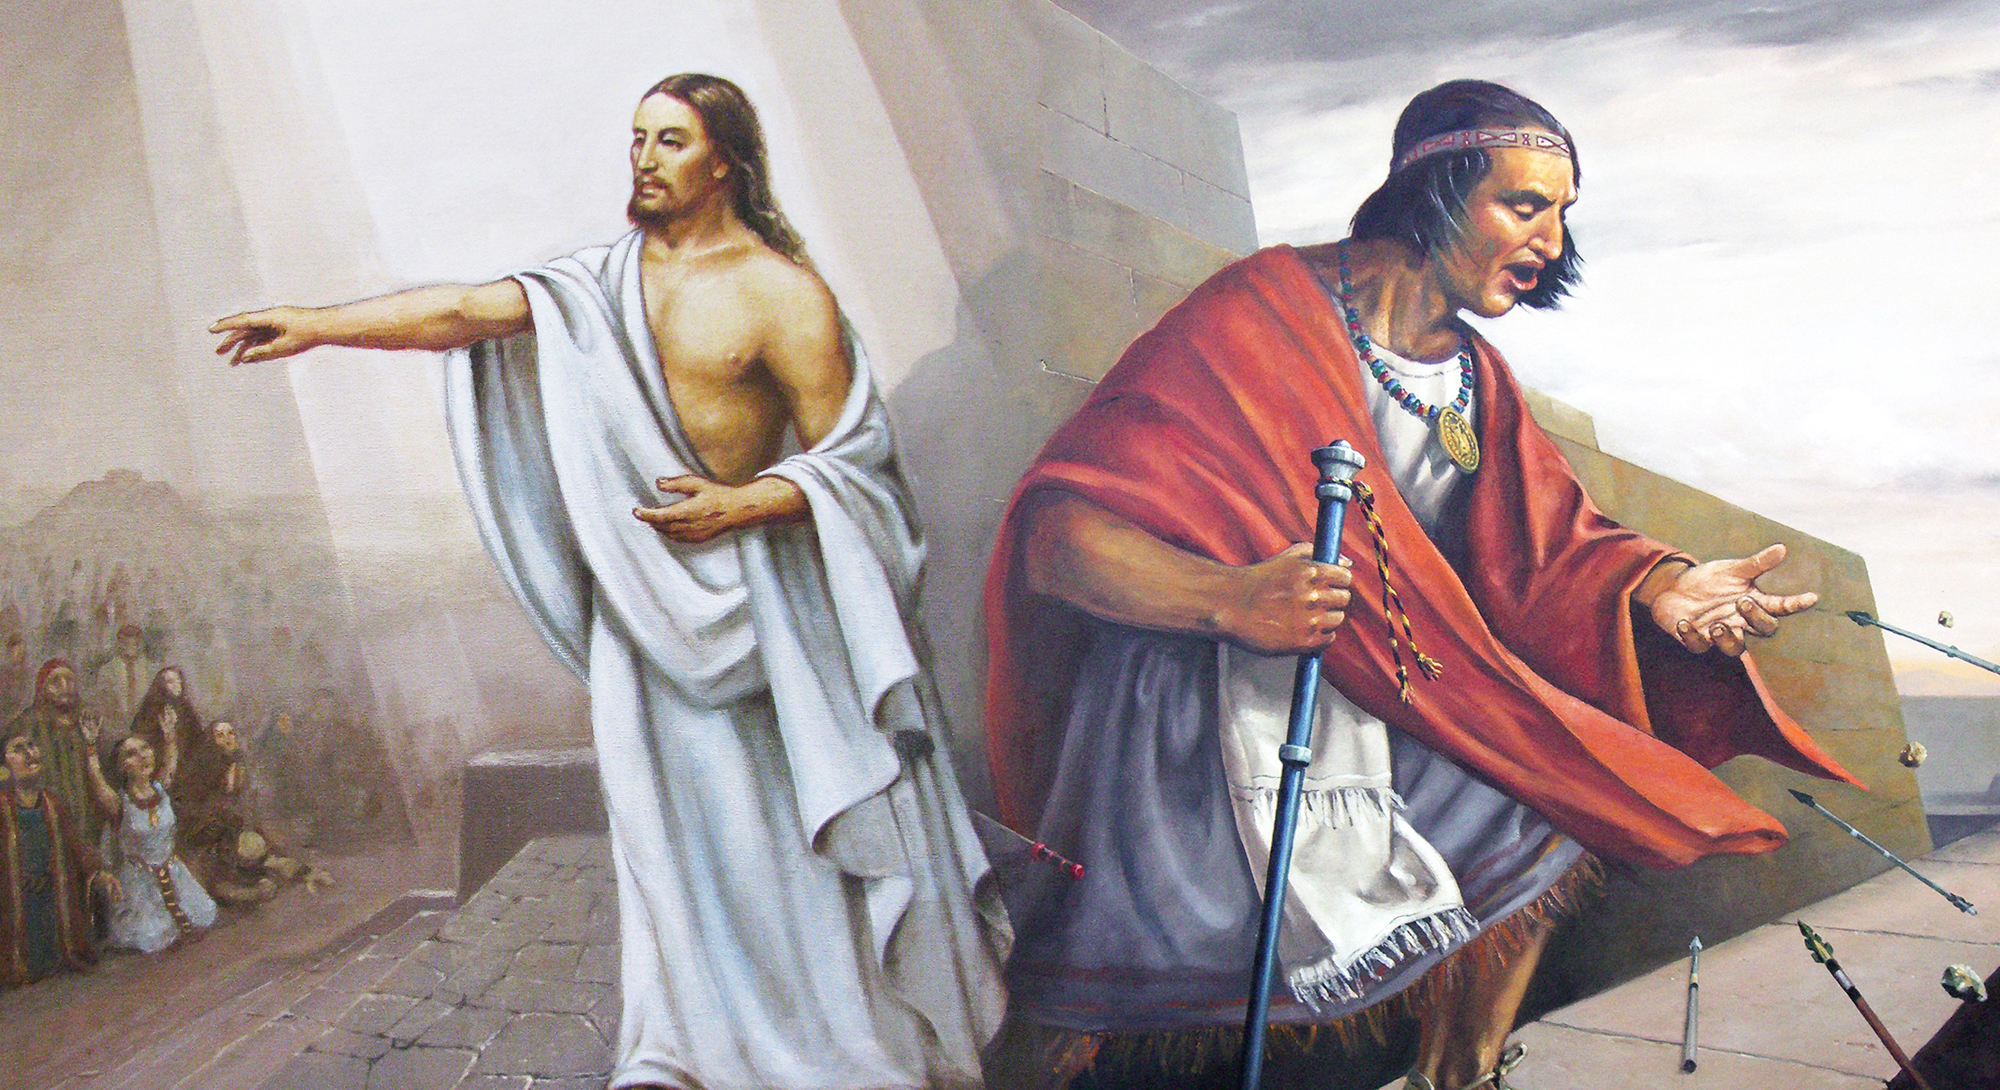 Composite He aqui soy Jesucristo and Samuel en la muralla by Jorge Cocco